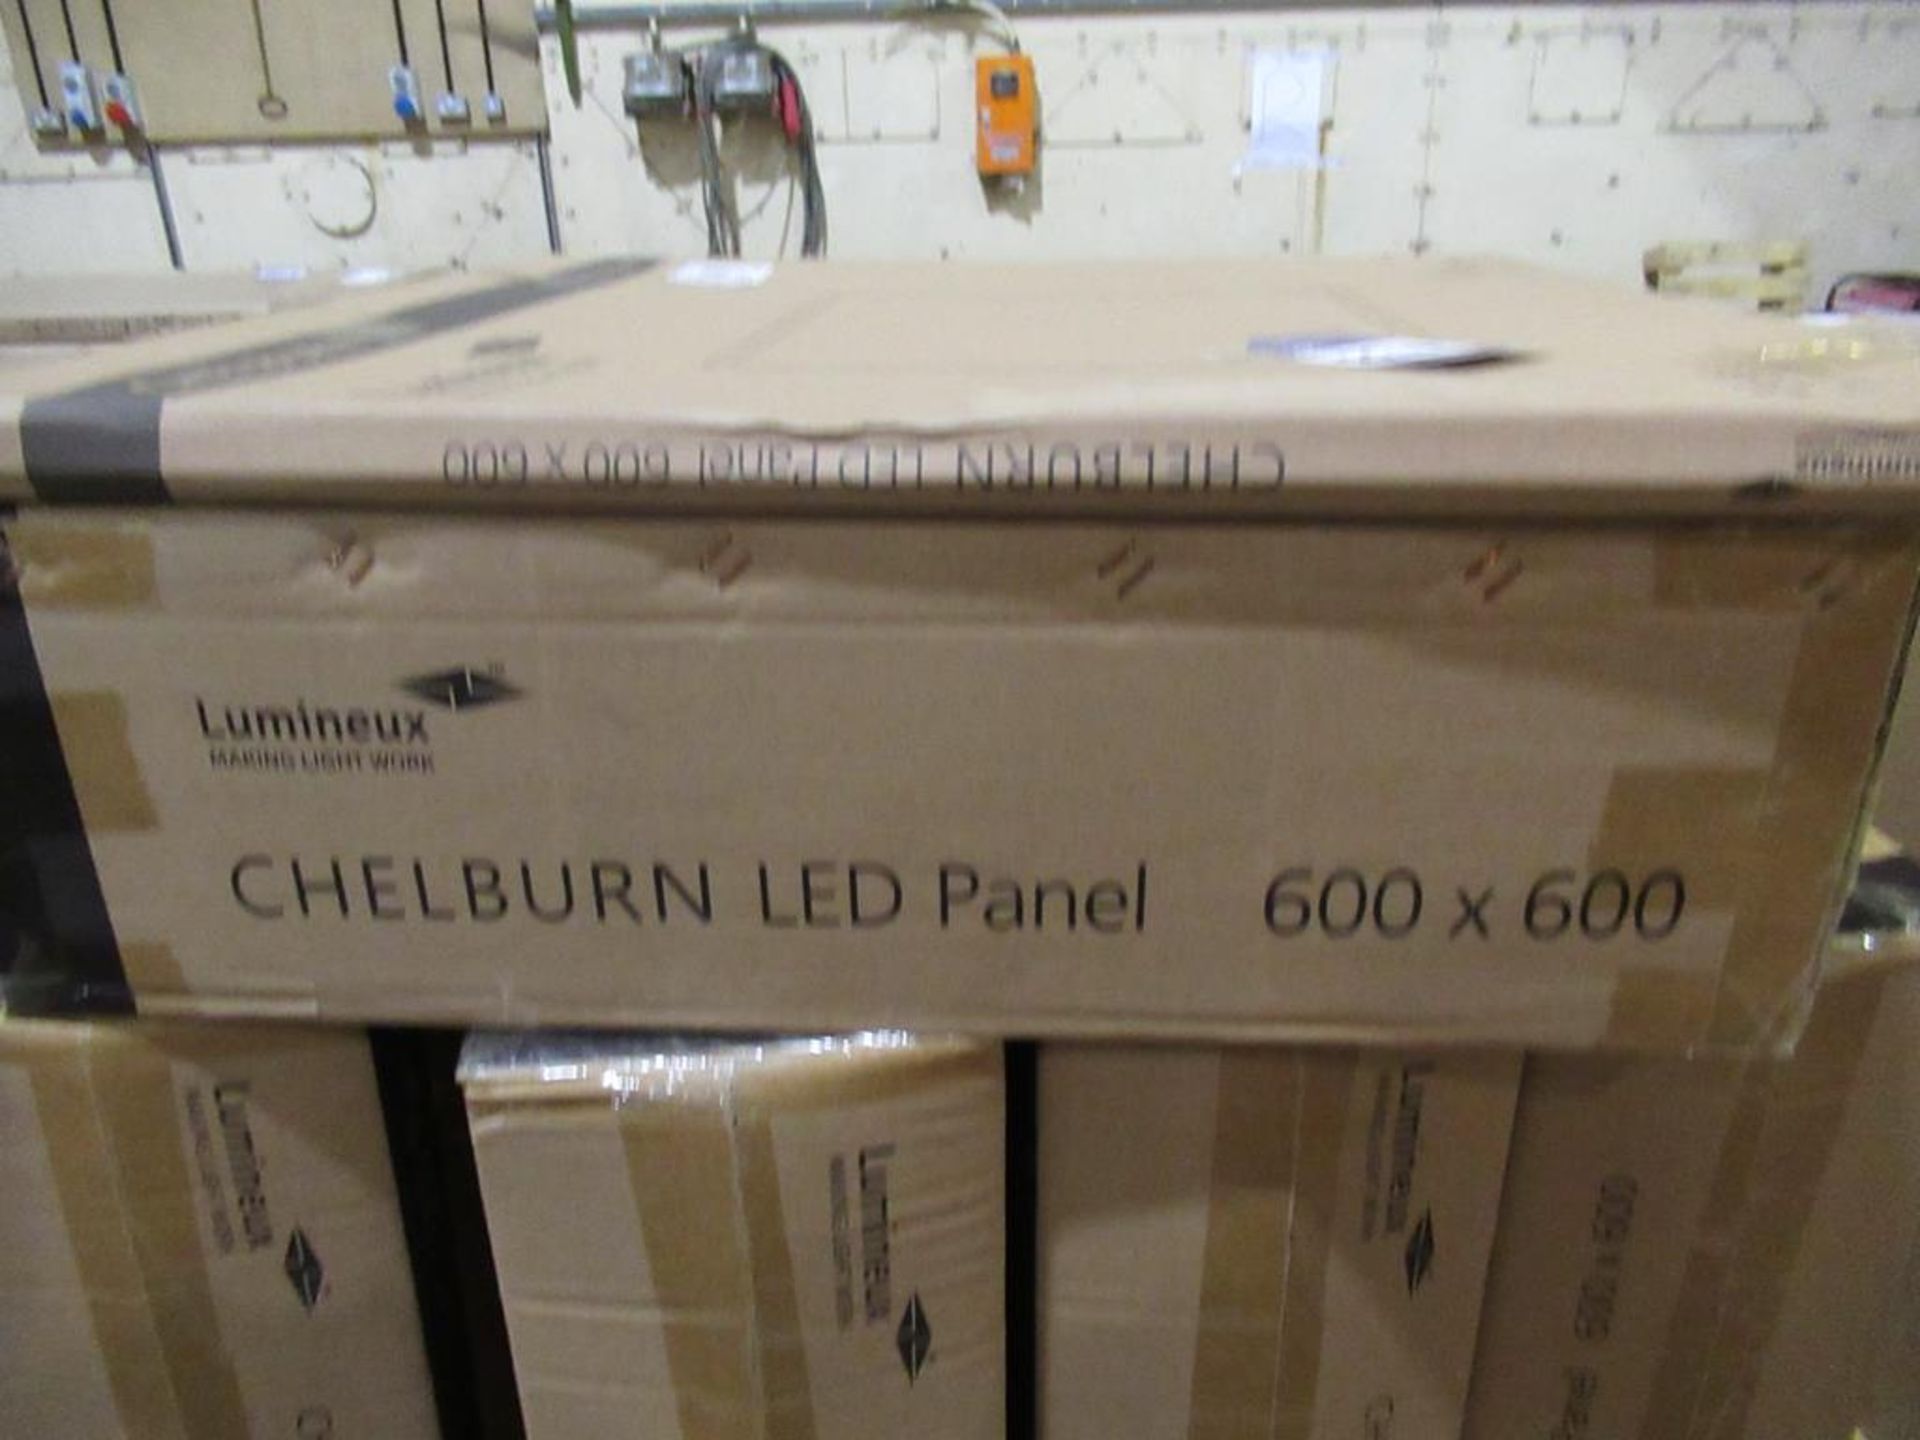 26 x Lumineux Chelburn LED Panel 600x600 TP(b) 32W 6000K OEM Trade Price £ 624 - Image 2 of 4